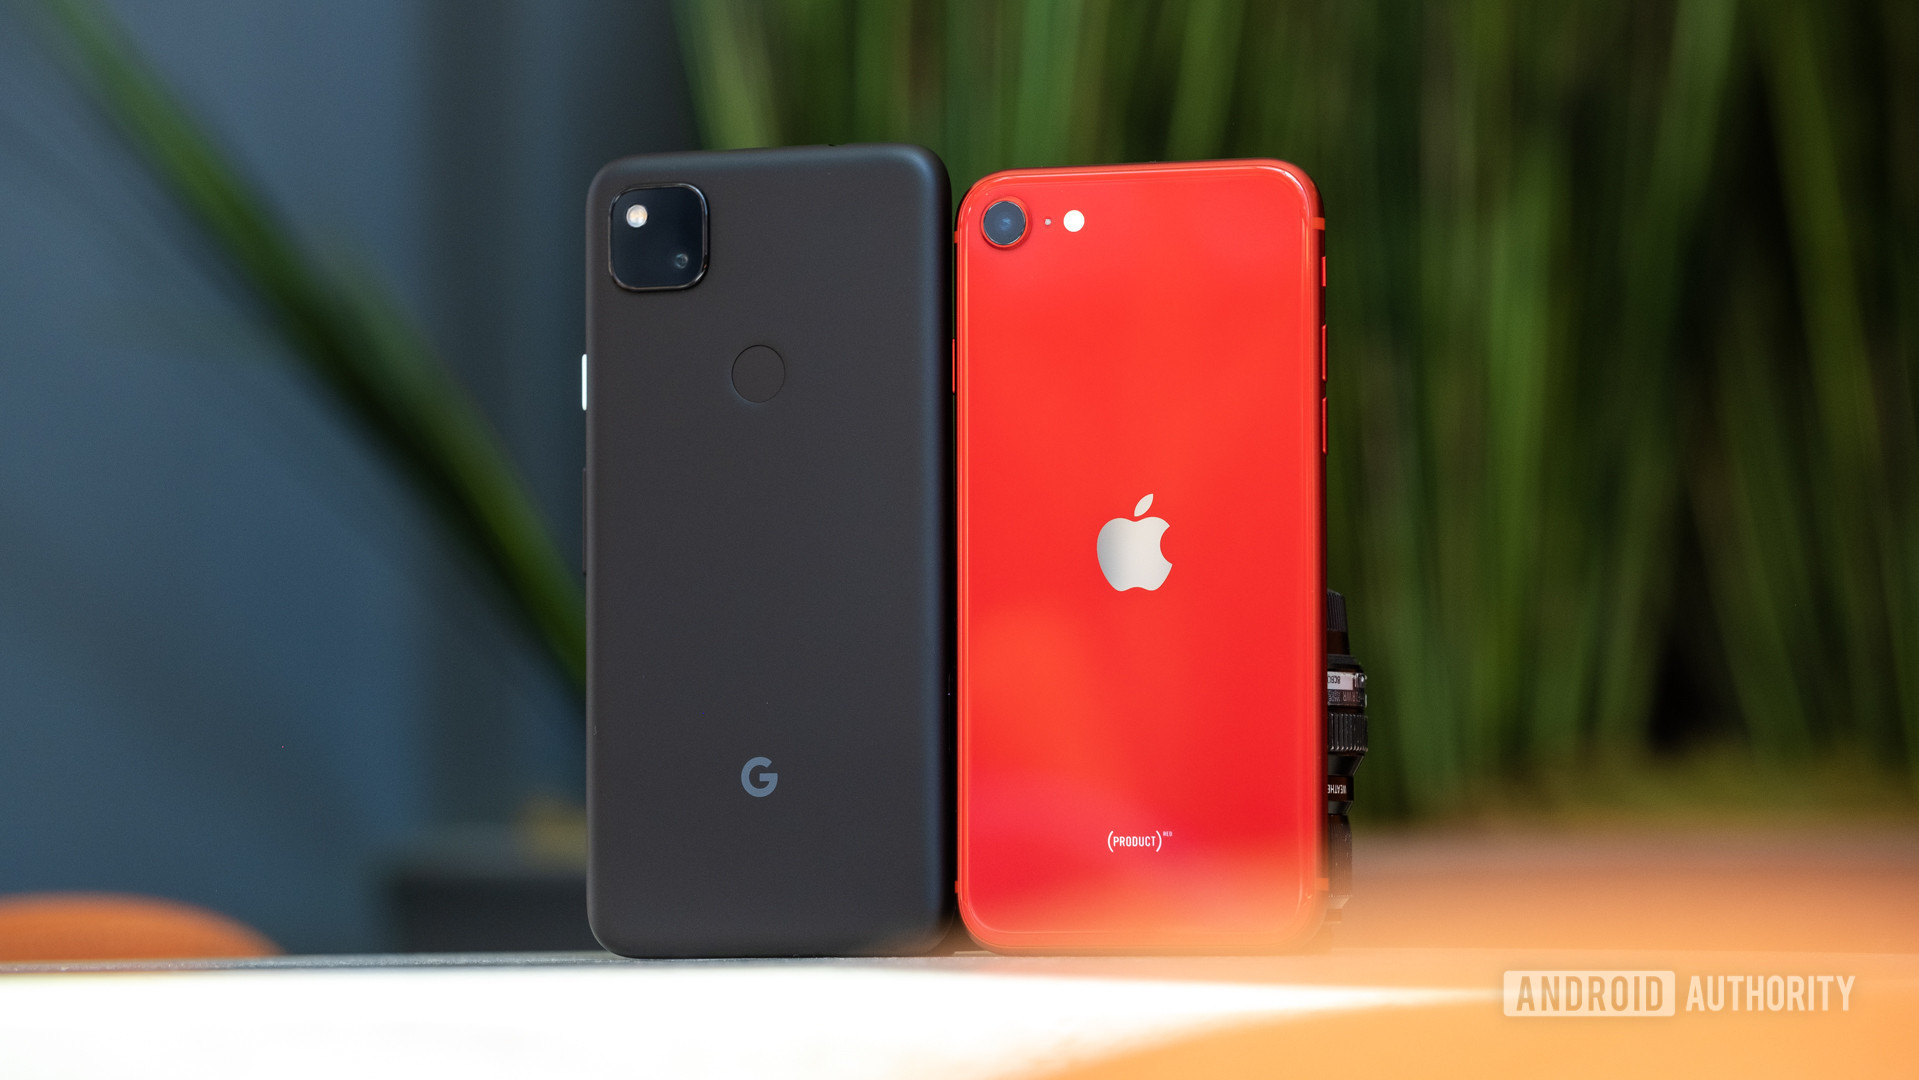 The Google Pixel 4a alongside the Apple iPhone SE